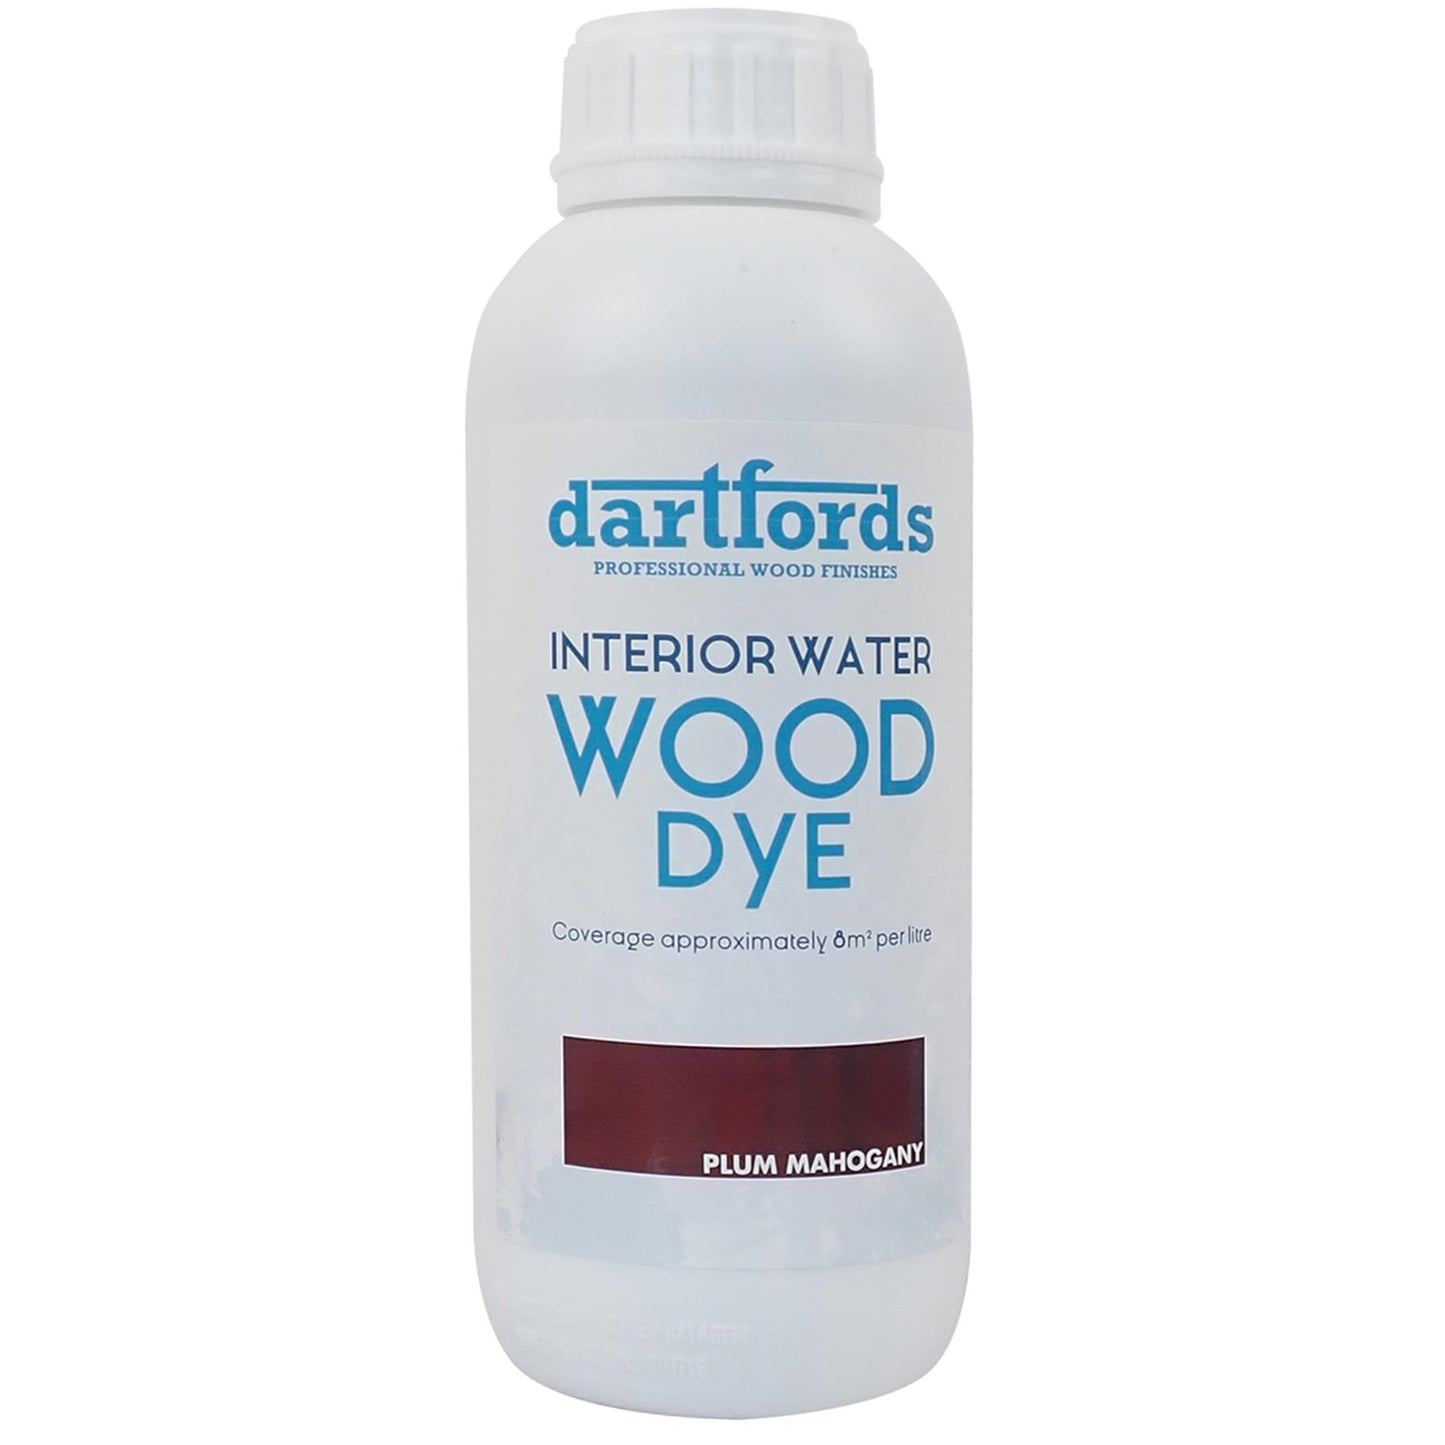 dartfords Plum Mahogany Interior Water Based Wood Dye - 1 litre Tin